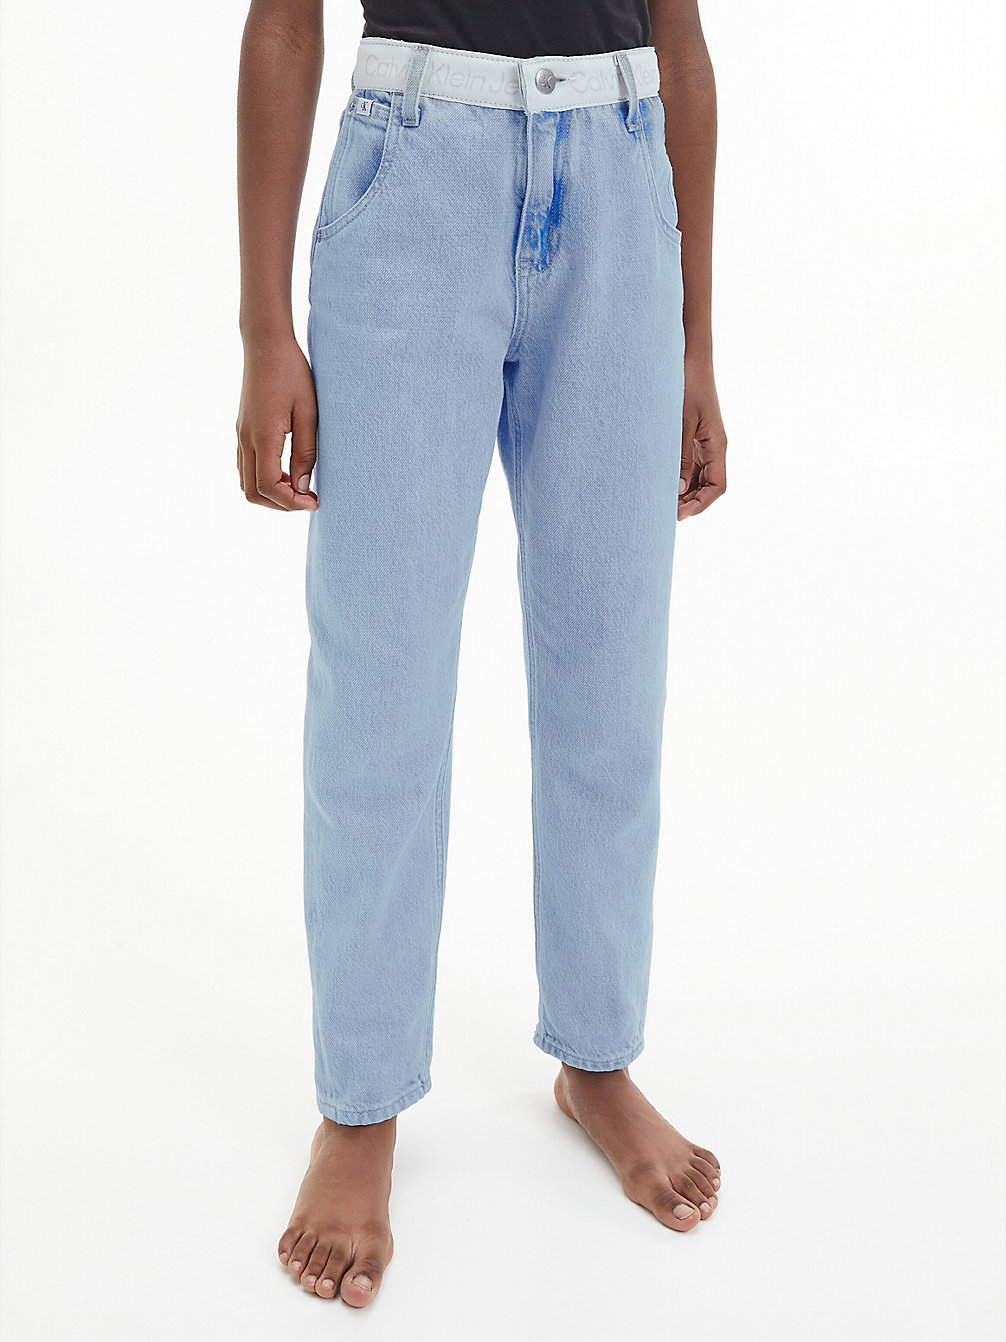 BRIGHT BLUE Relaxed Barrel Leg Jeans undefined girls Calvin Klein